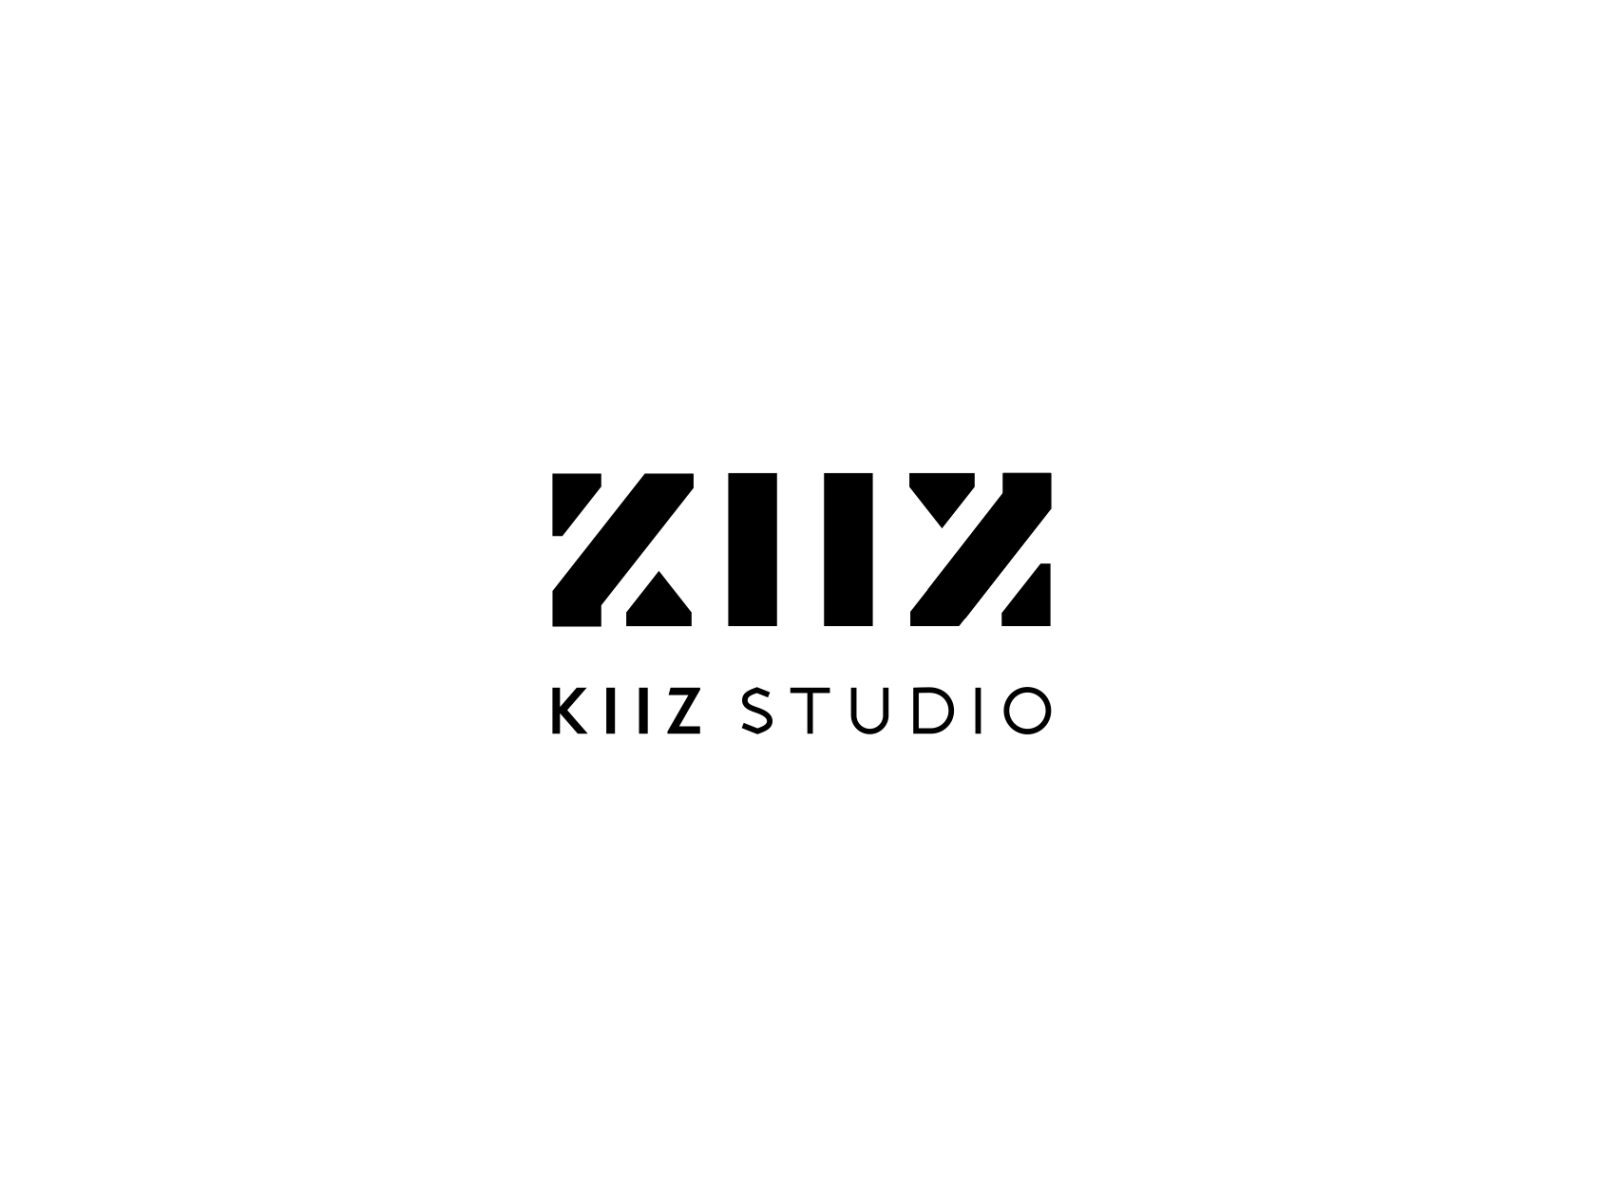 Logo animation for Kiiz studio